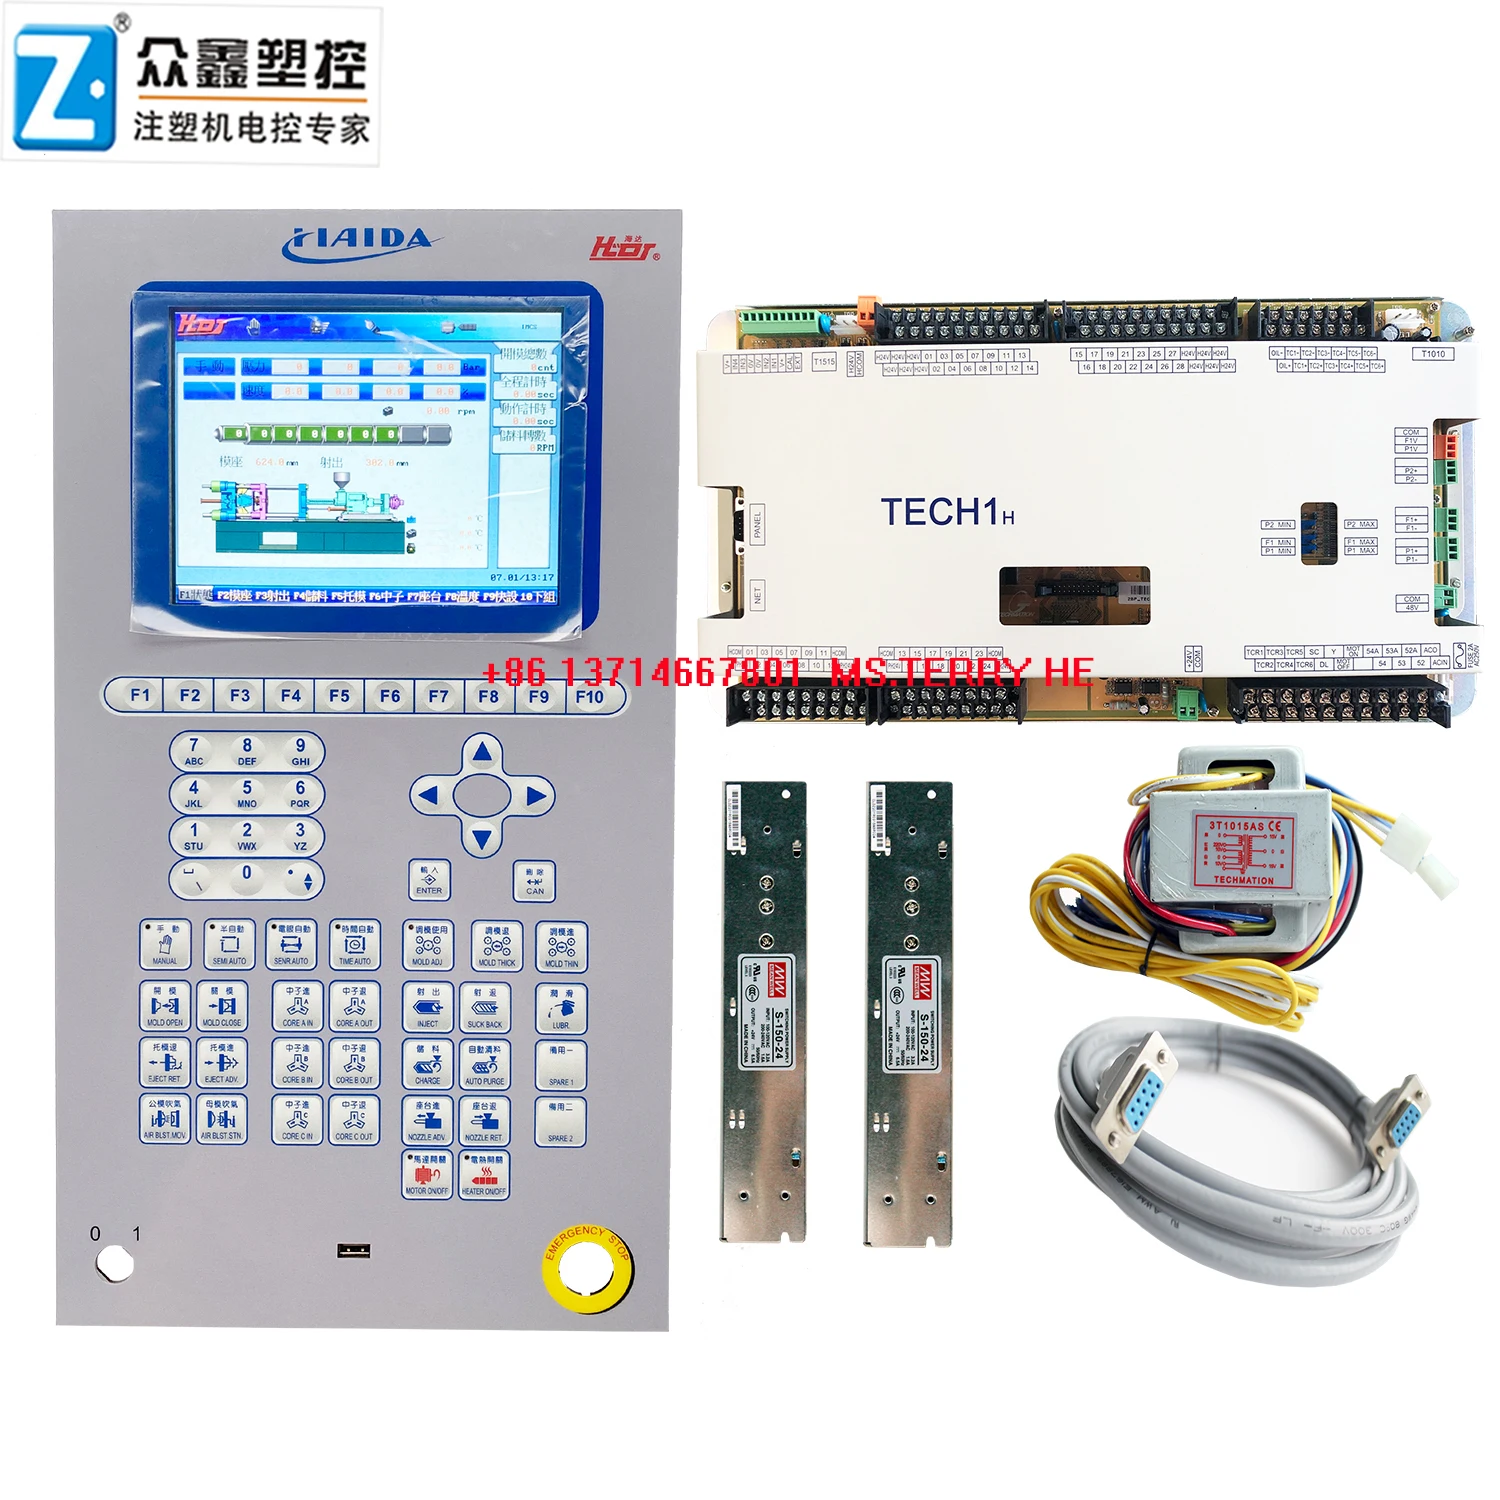 

Brand new & Original Techmation TECH1S TECH1 + HMI Q8M control system TECH1H PLC for HAIDA molding machine